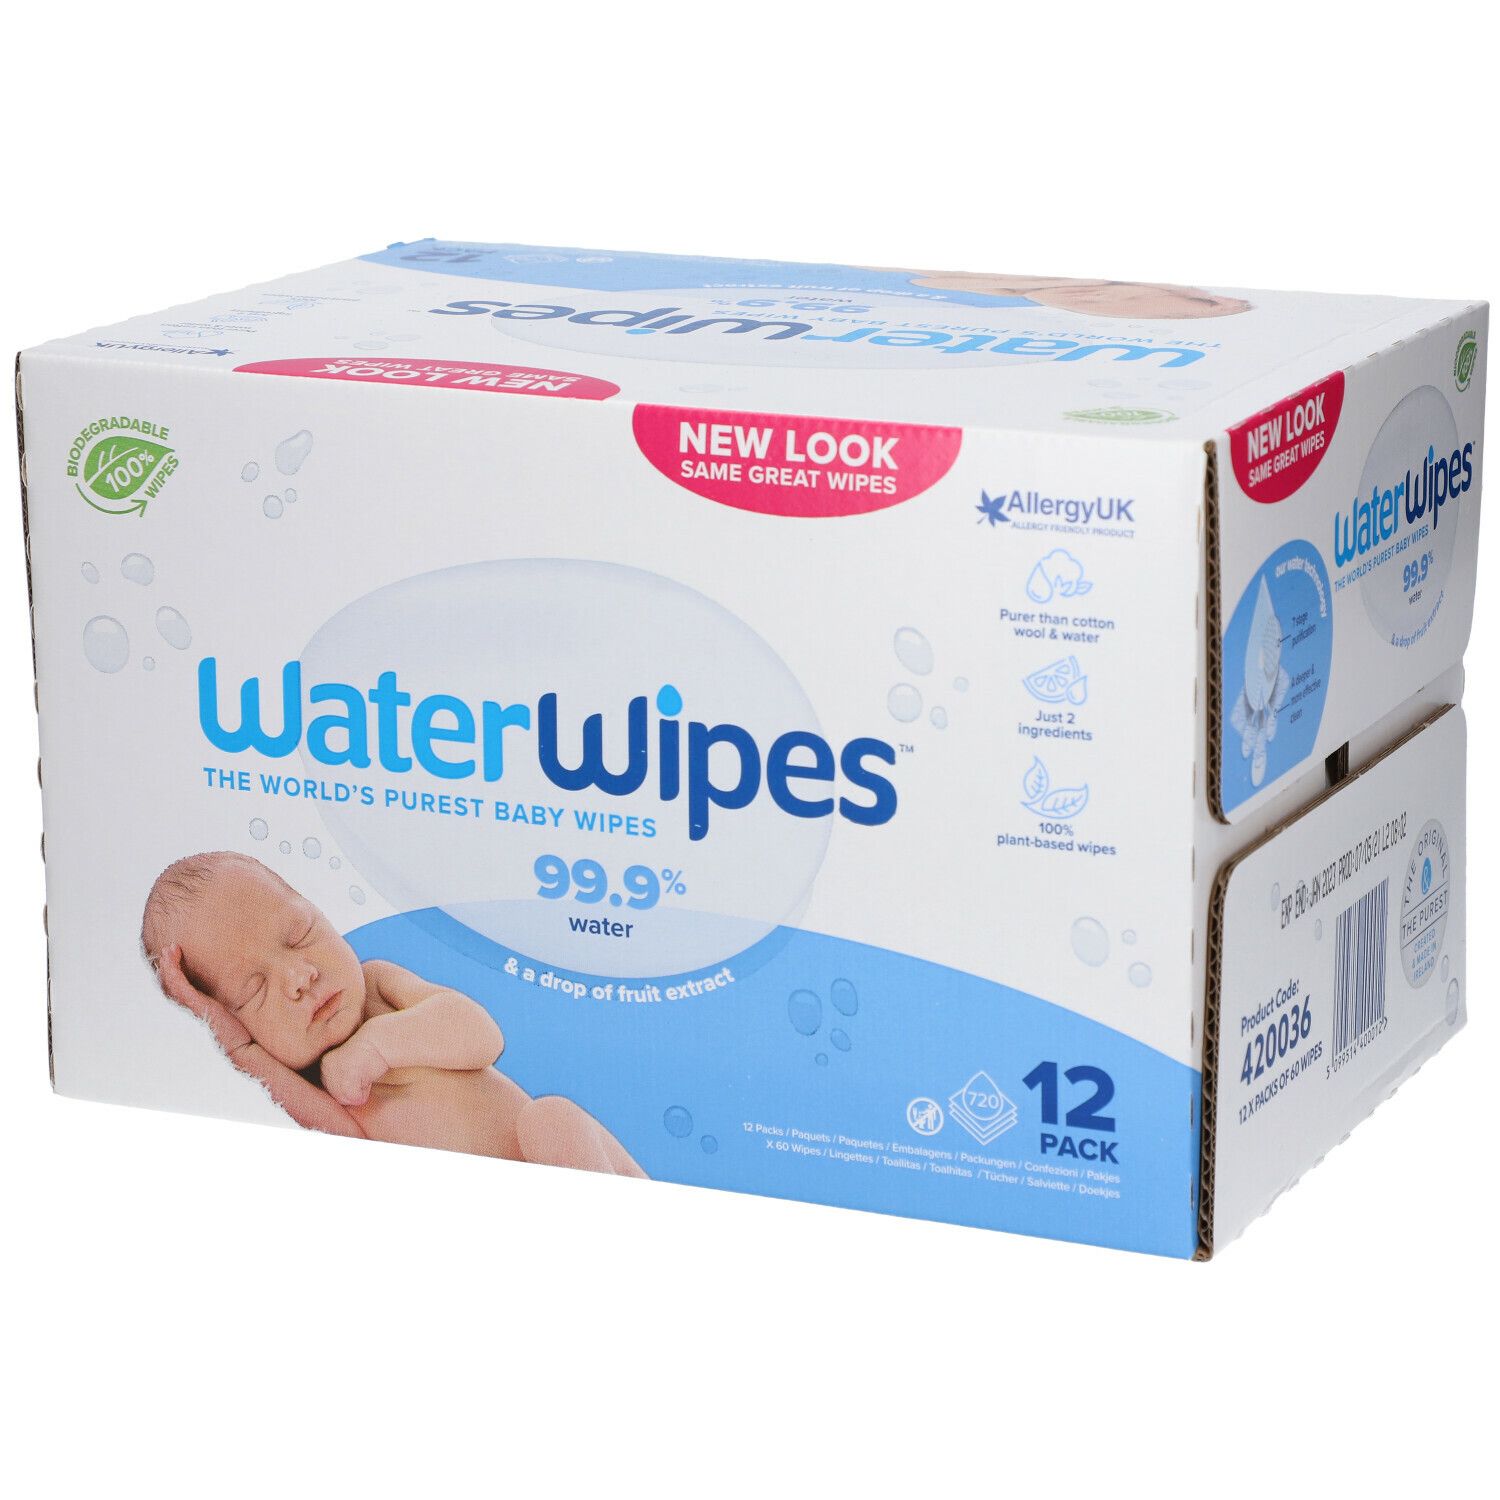 Lingette water wipes 24x60 - WaterWipes